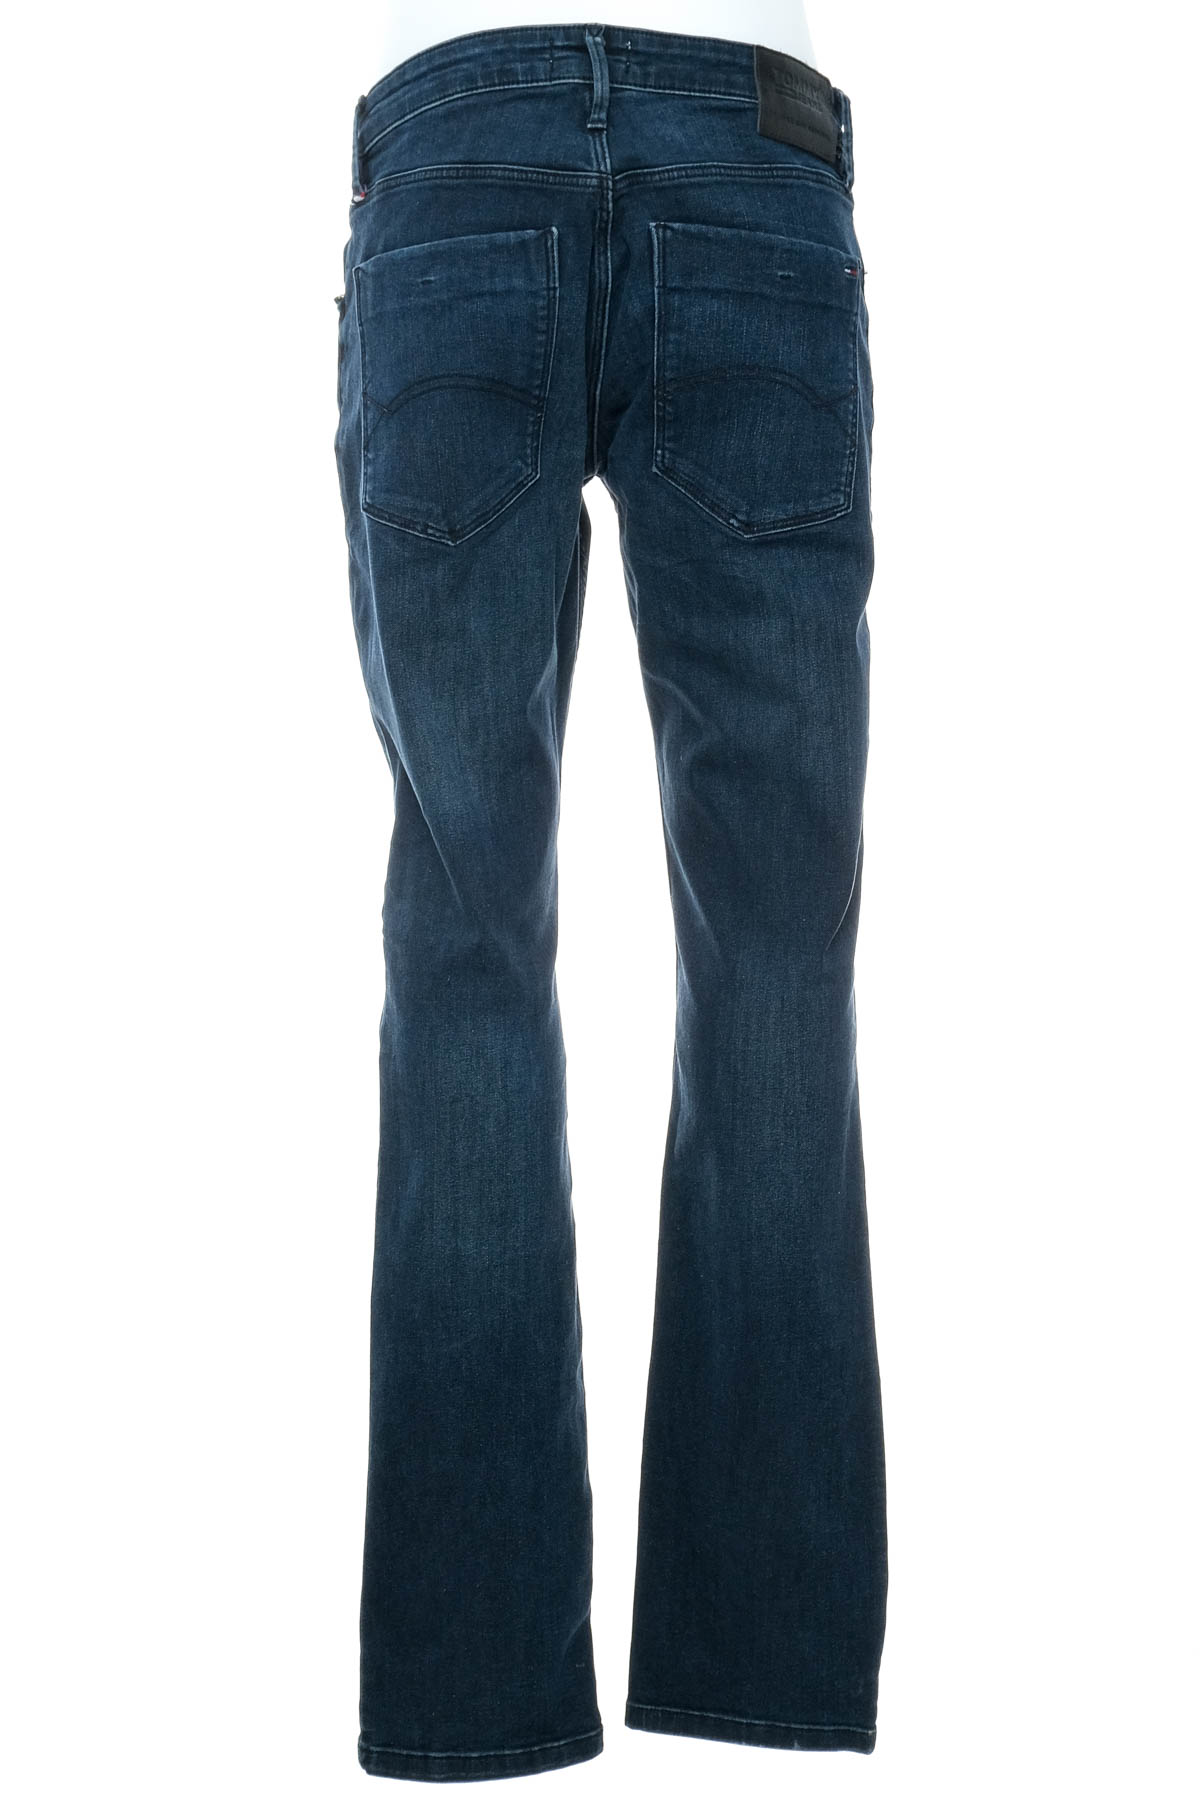 Men's jeans - TOMMY JEANS - 1